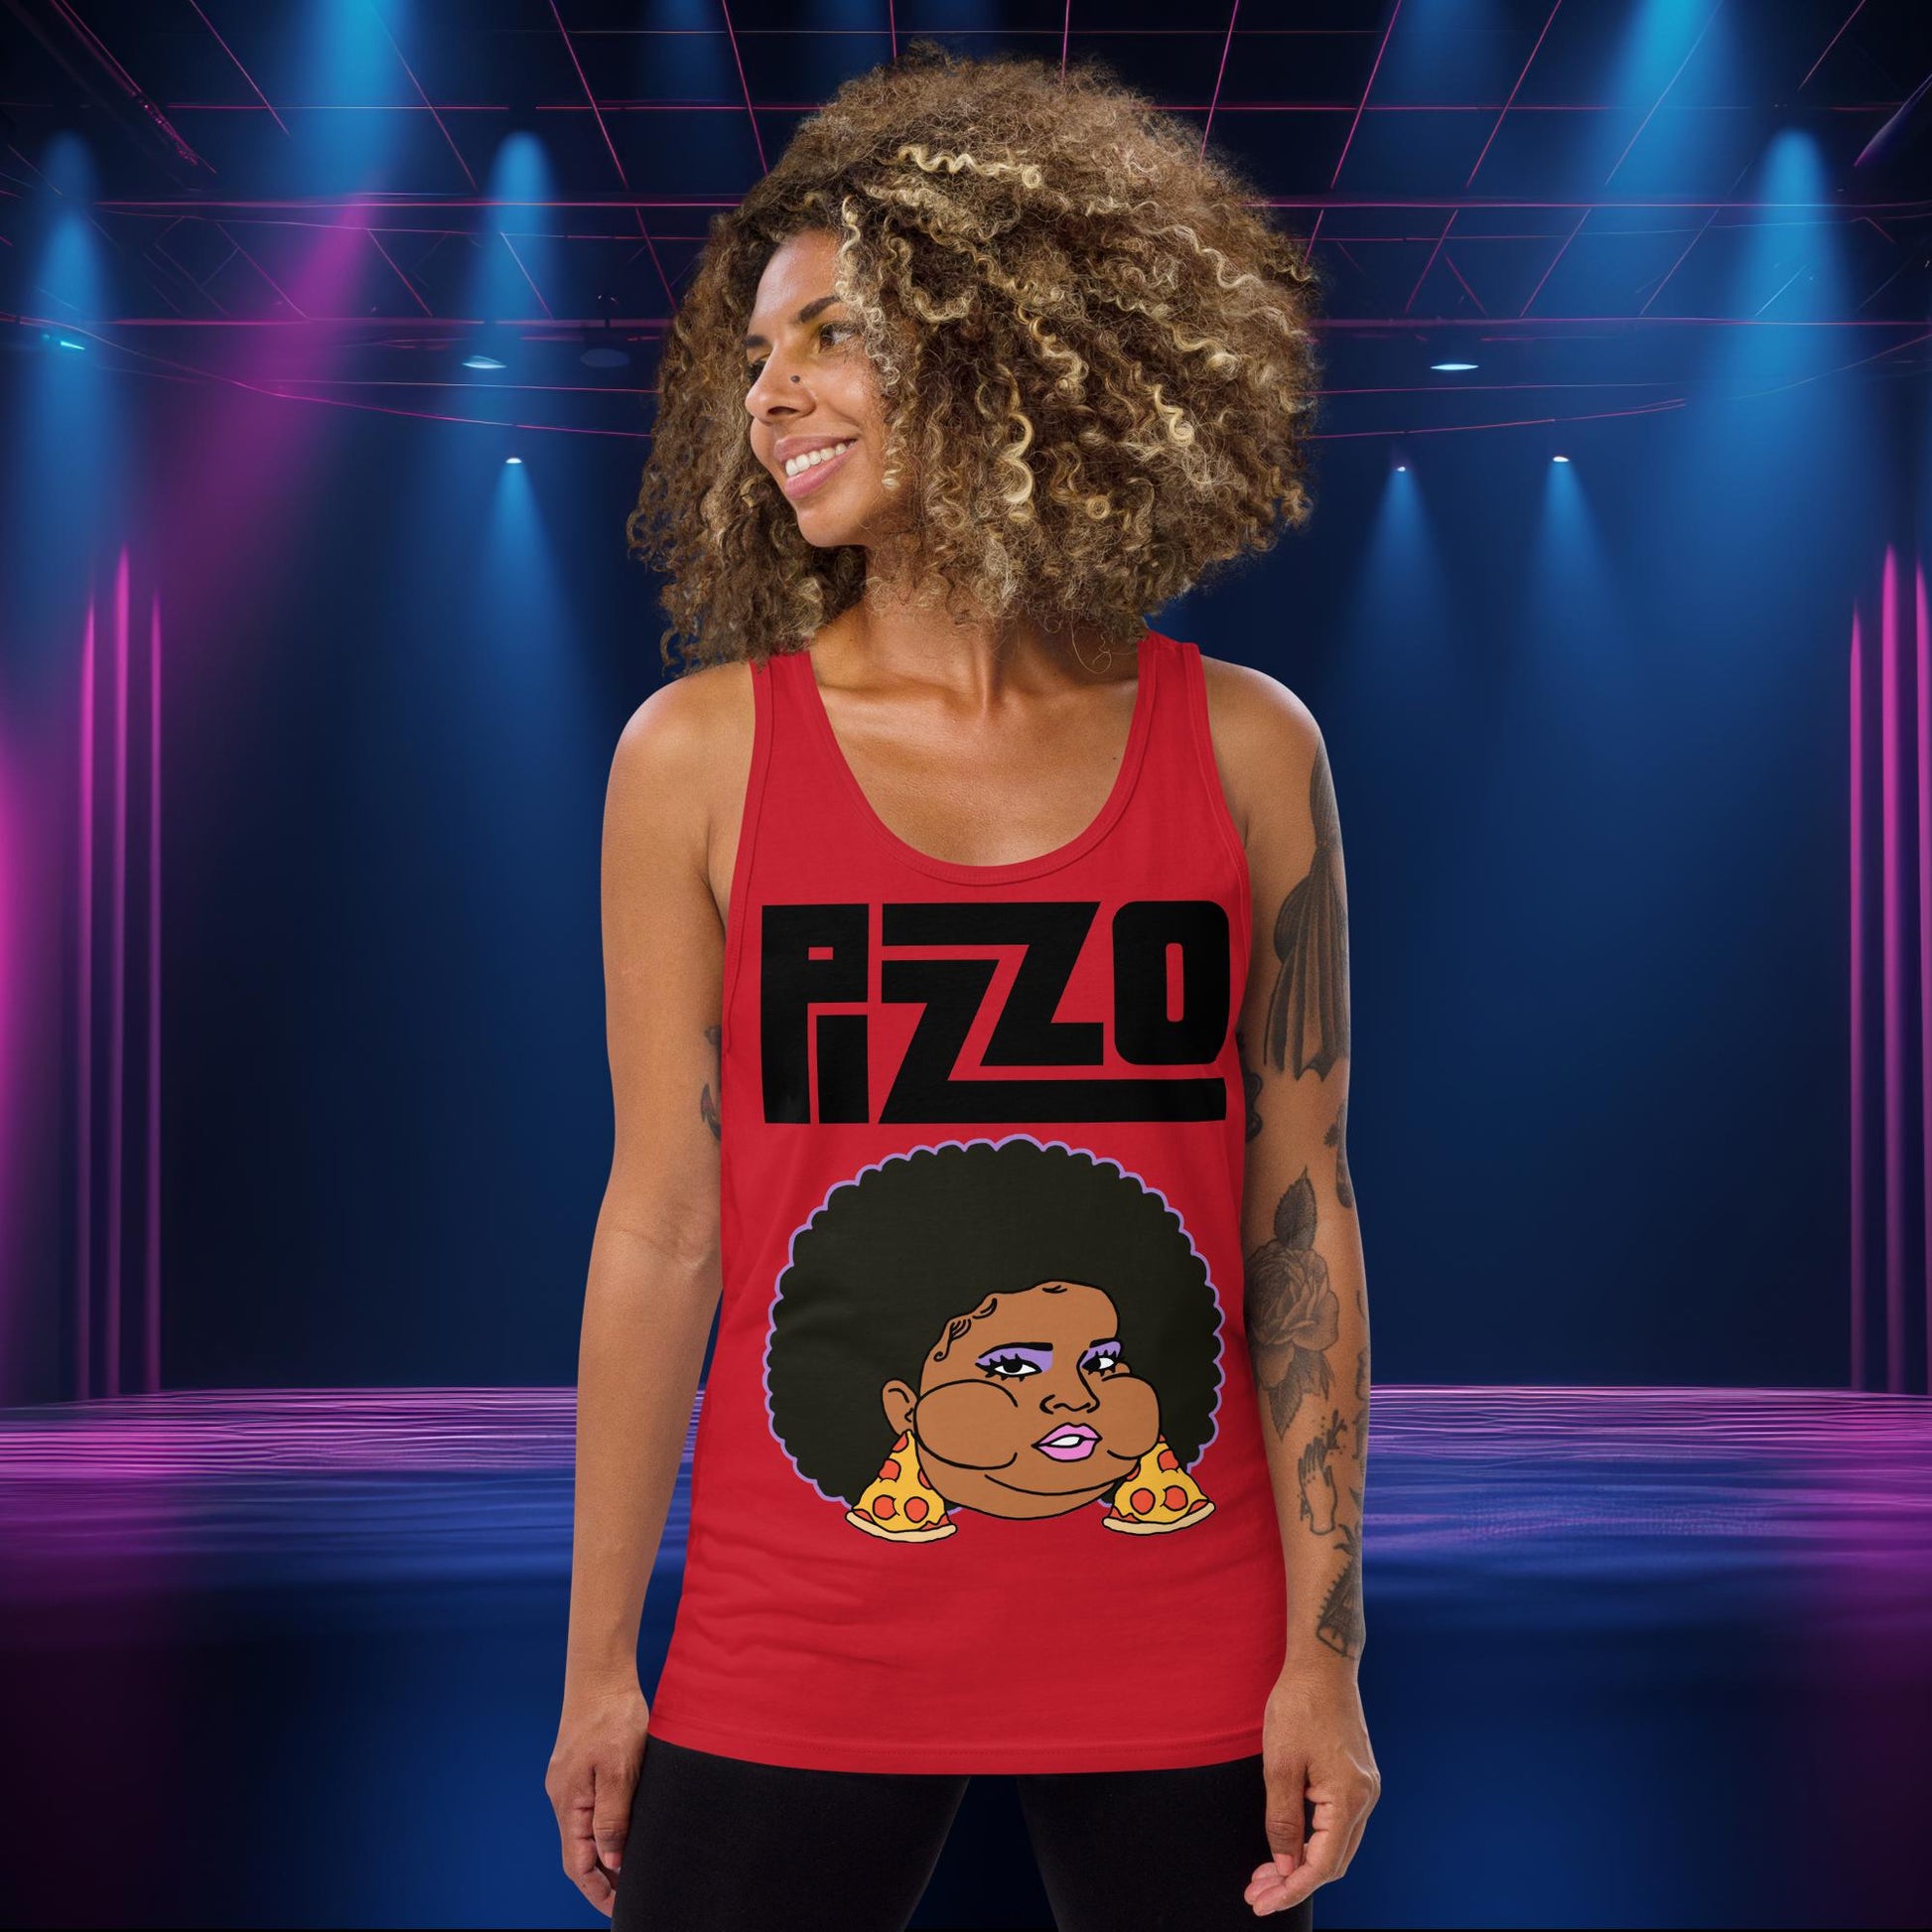 Pizzo Lizzo Pizza Lizzo Merch Lizzo Gift Body Positivity Body empowerment Lizzo Tank Top Next Cult Brand